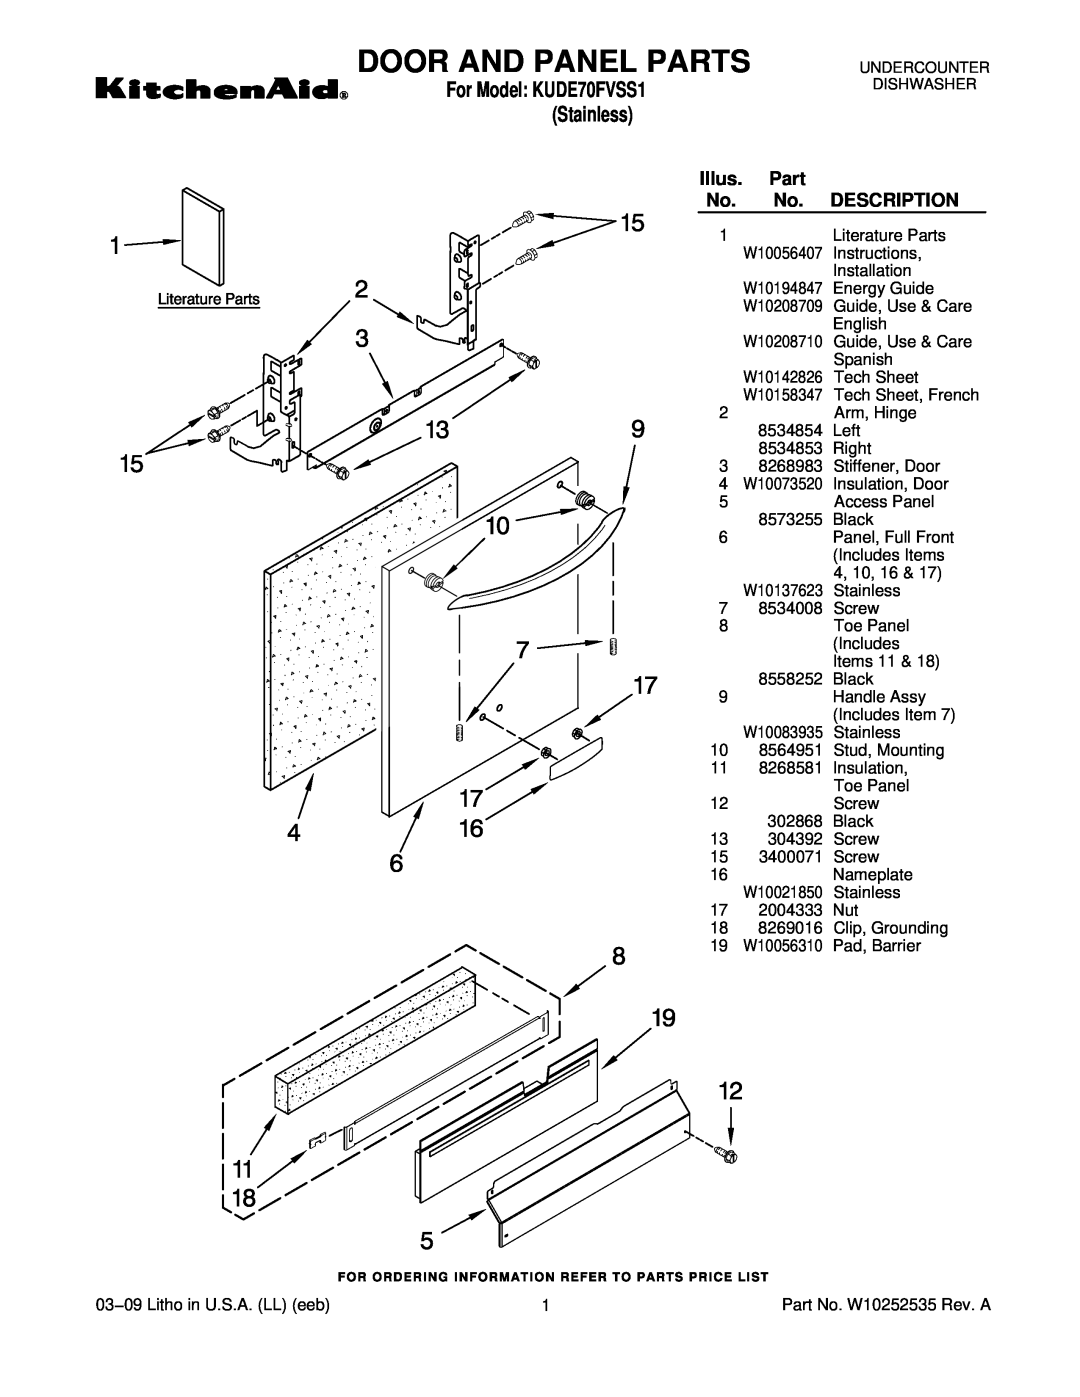 KitchenAid manual Illus, Description, Door And Panel Parts, For Model KUDE70FVSS1, Stainless 